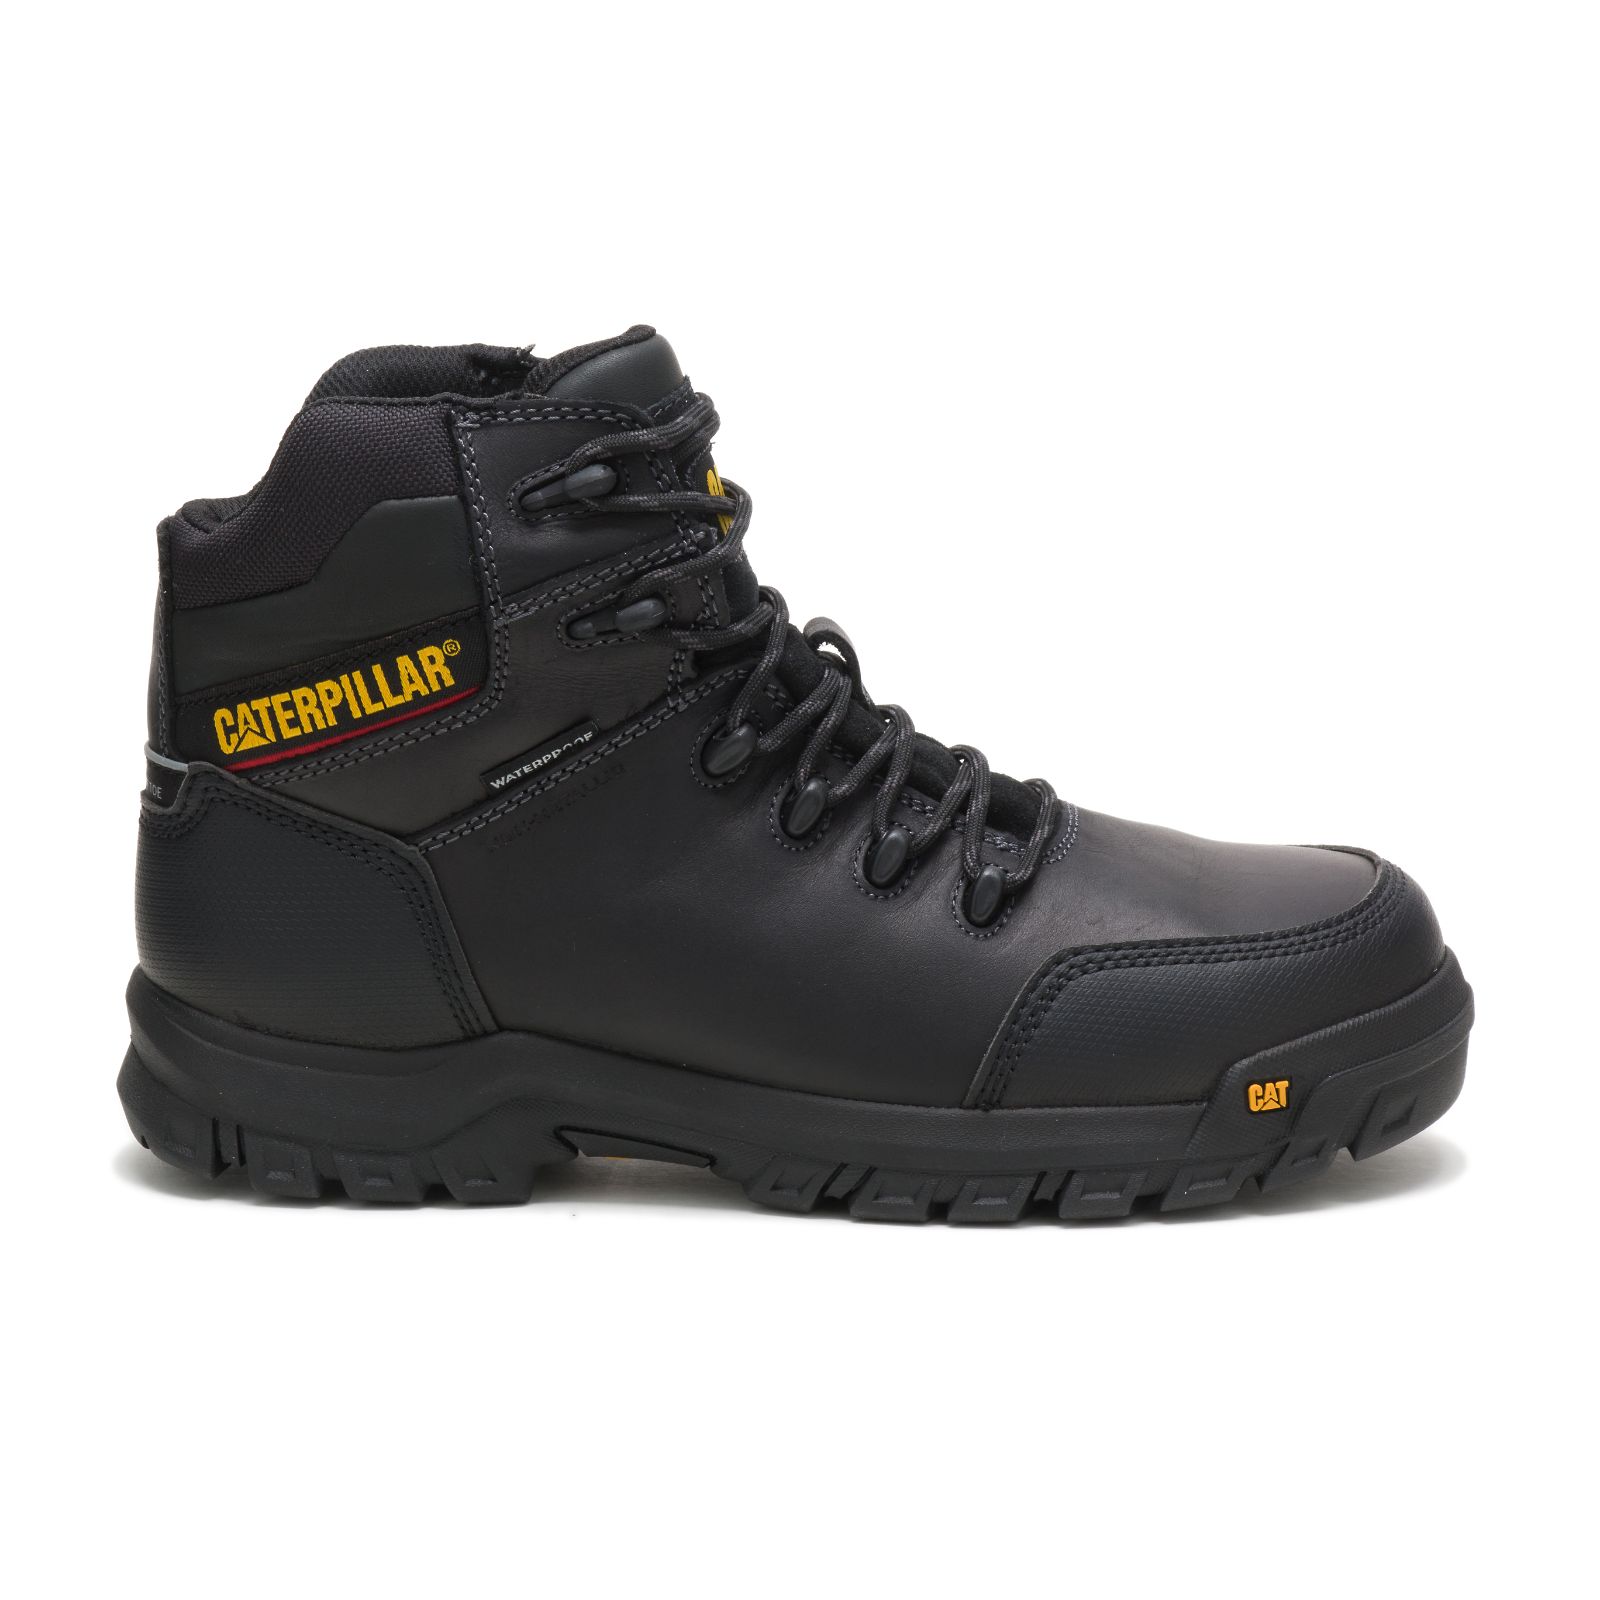 Caterpillar Boots Pakistan - Caterpillar Resorption Waterproof Composite Toe Mens Work Boots Black (329651-DGH)